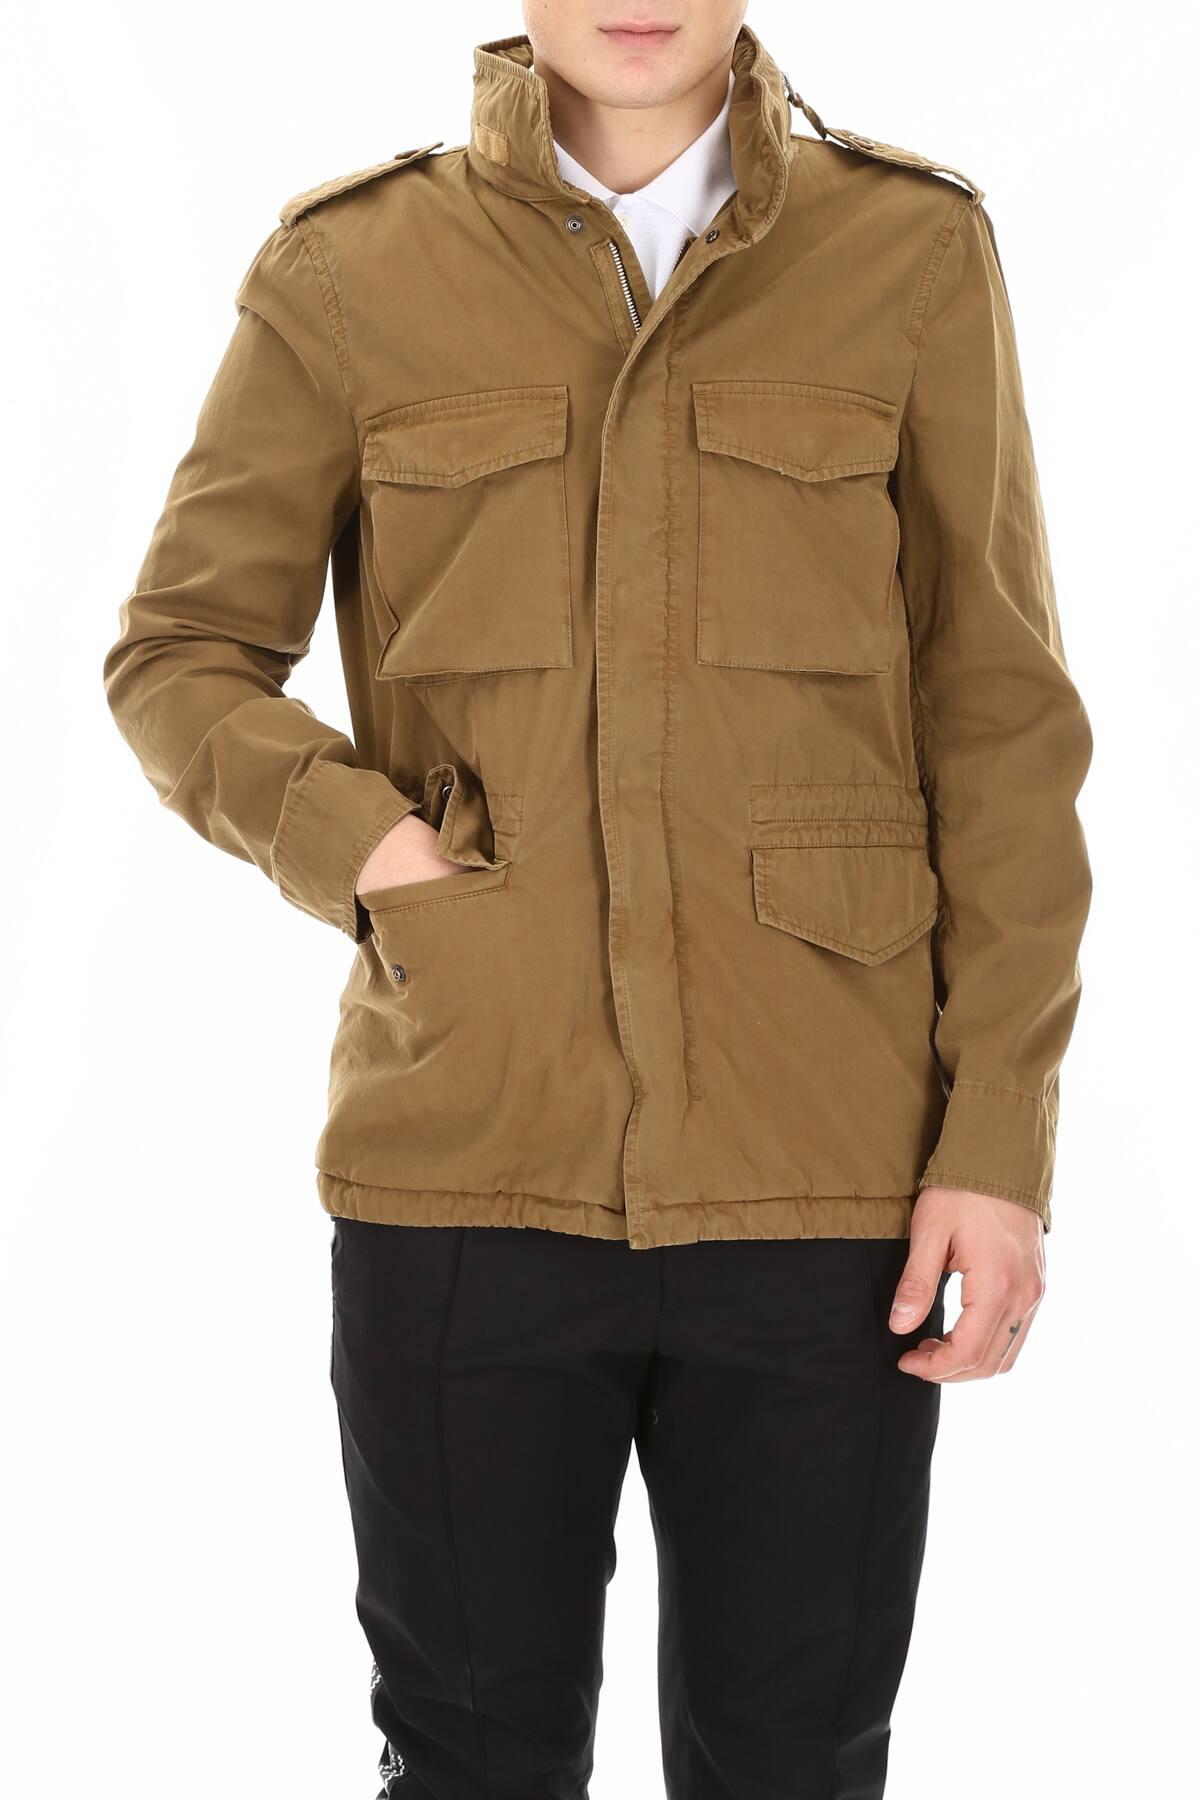 Aspesi Cotton Minifield Jacket in Brown for Men - Lyst